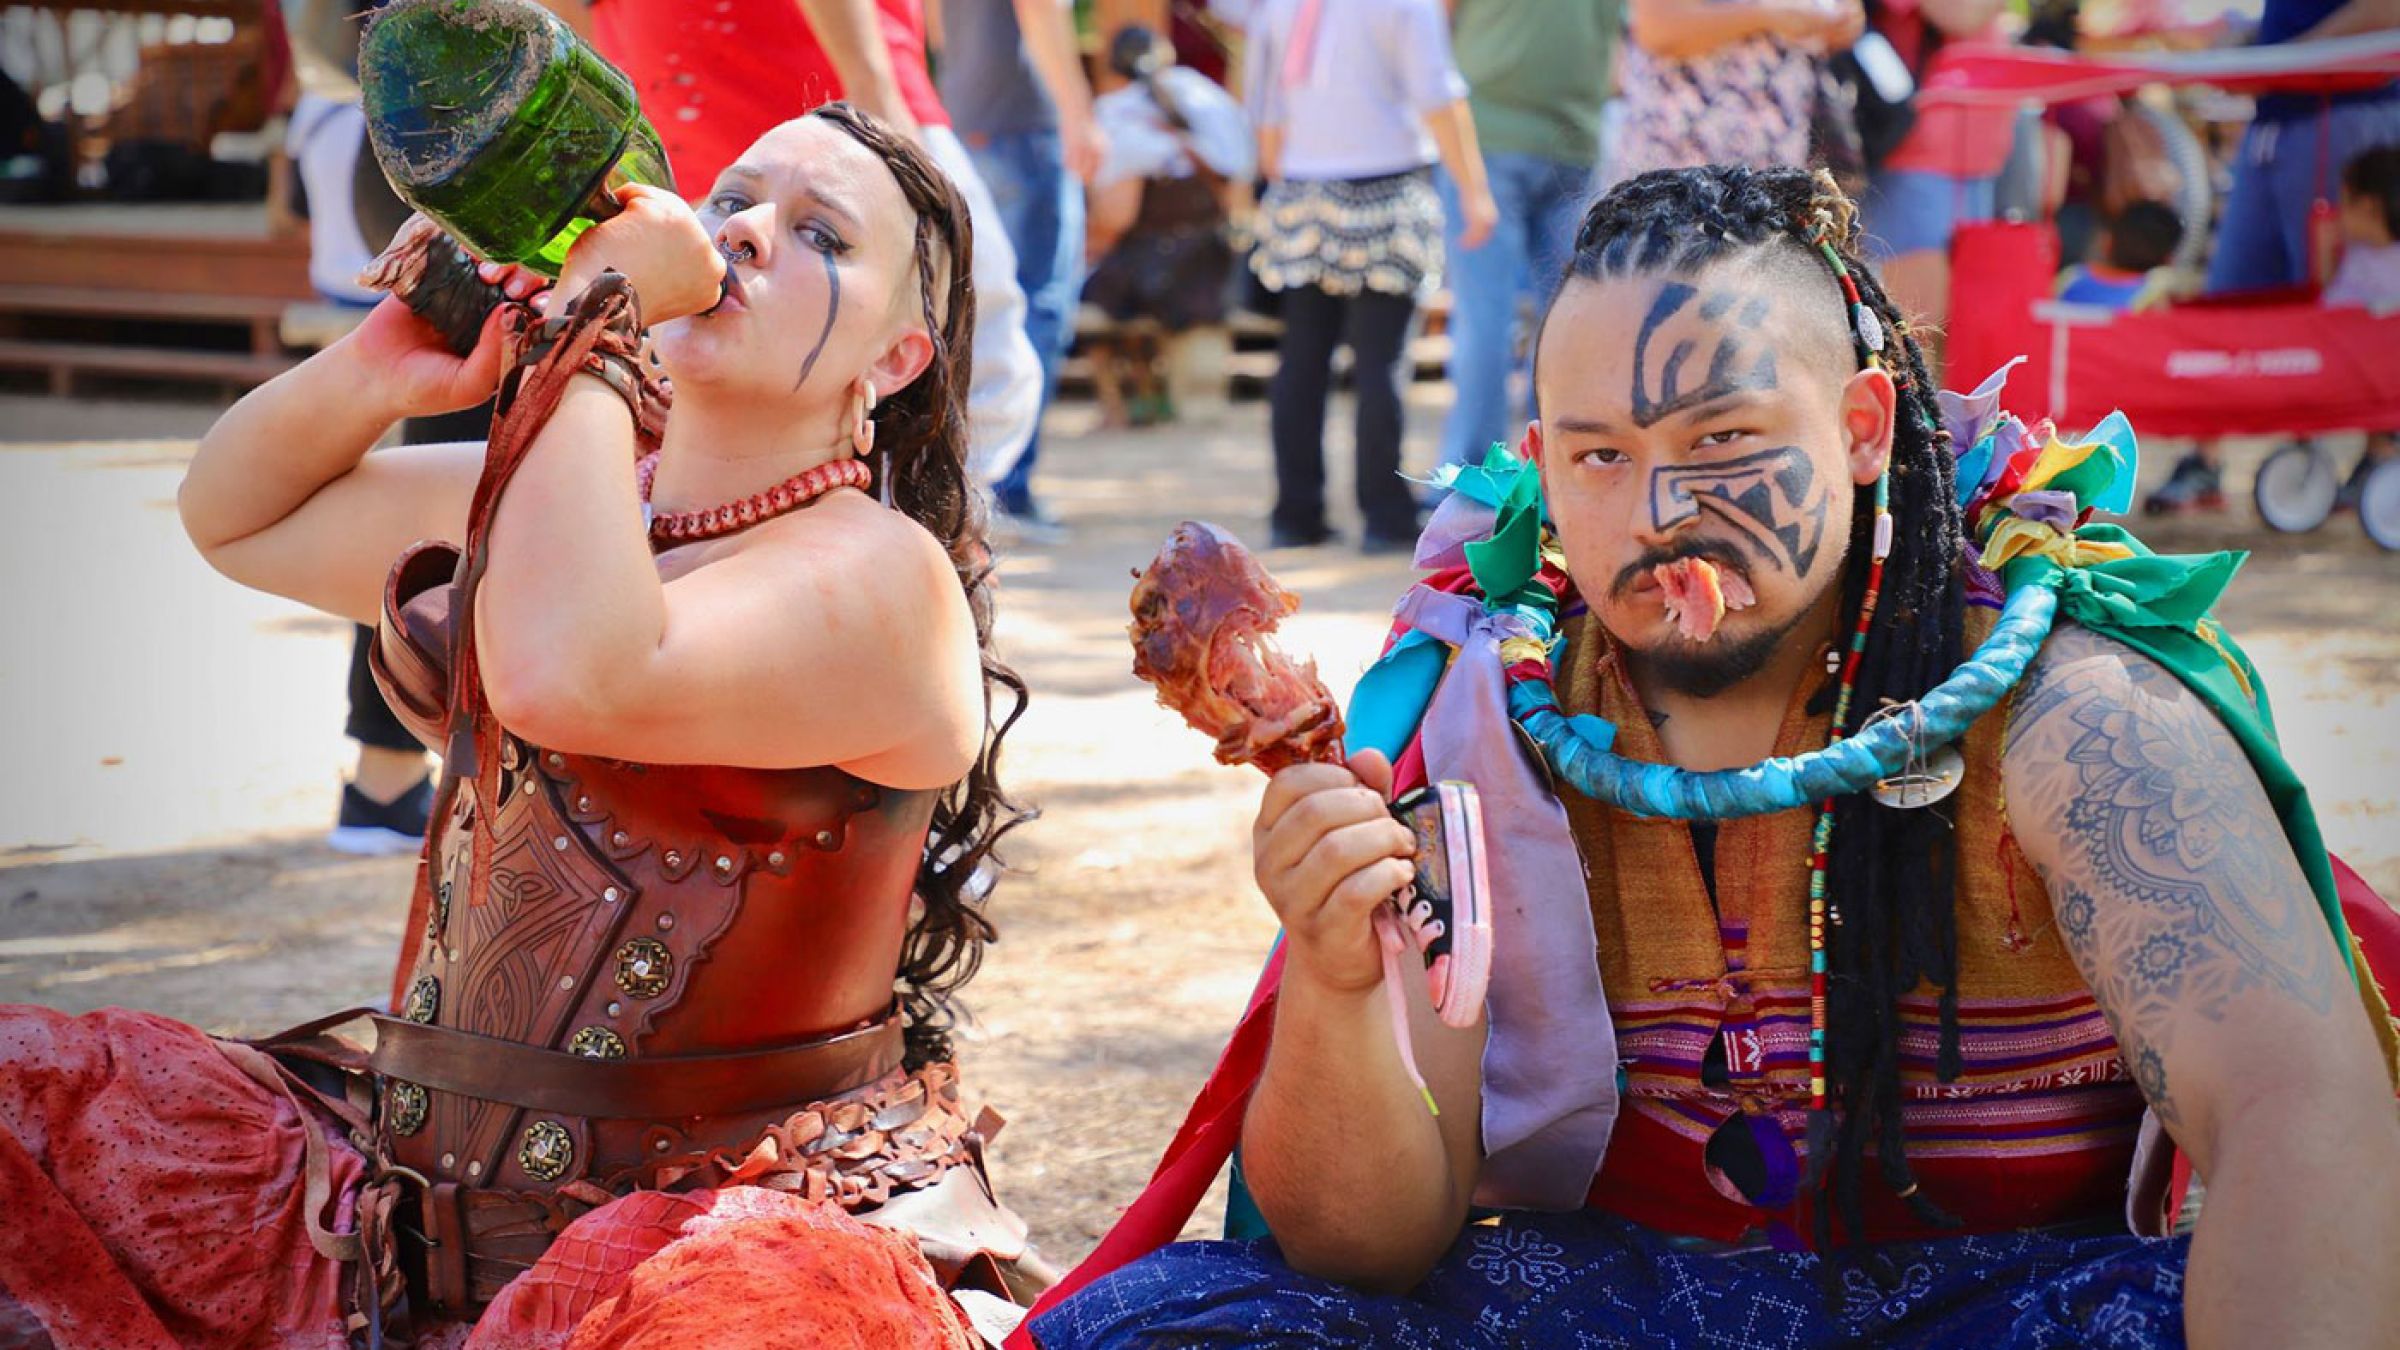 Enchanting Entertainment, Adventures & Attractions | Texas Renaissance Festival